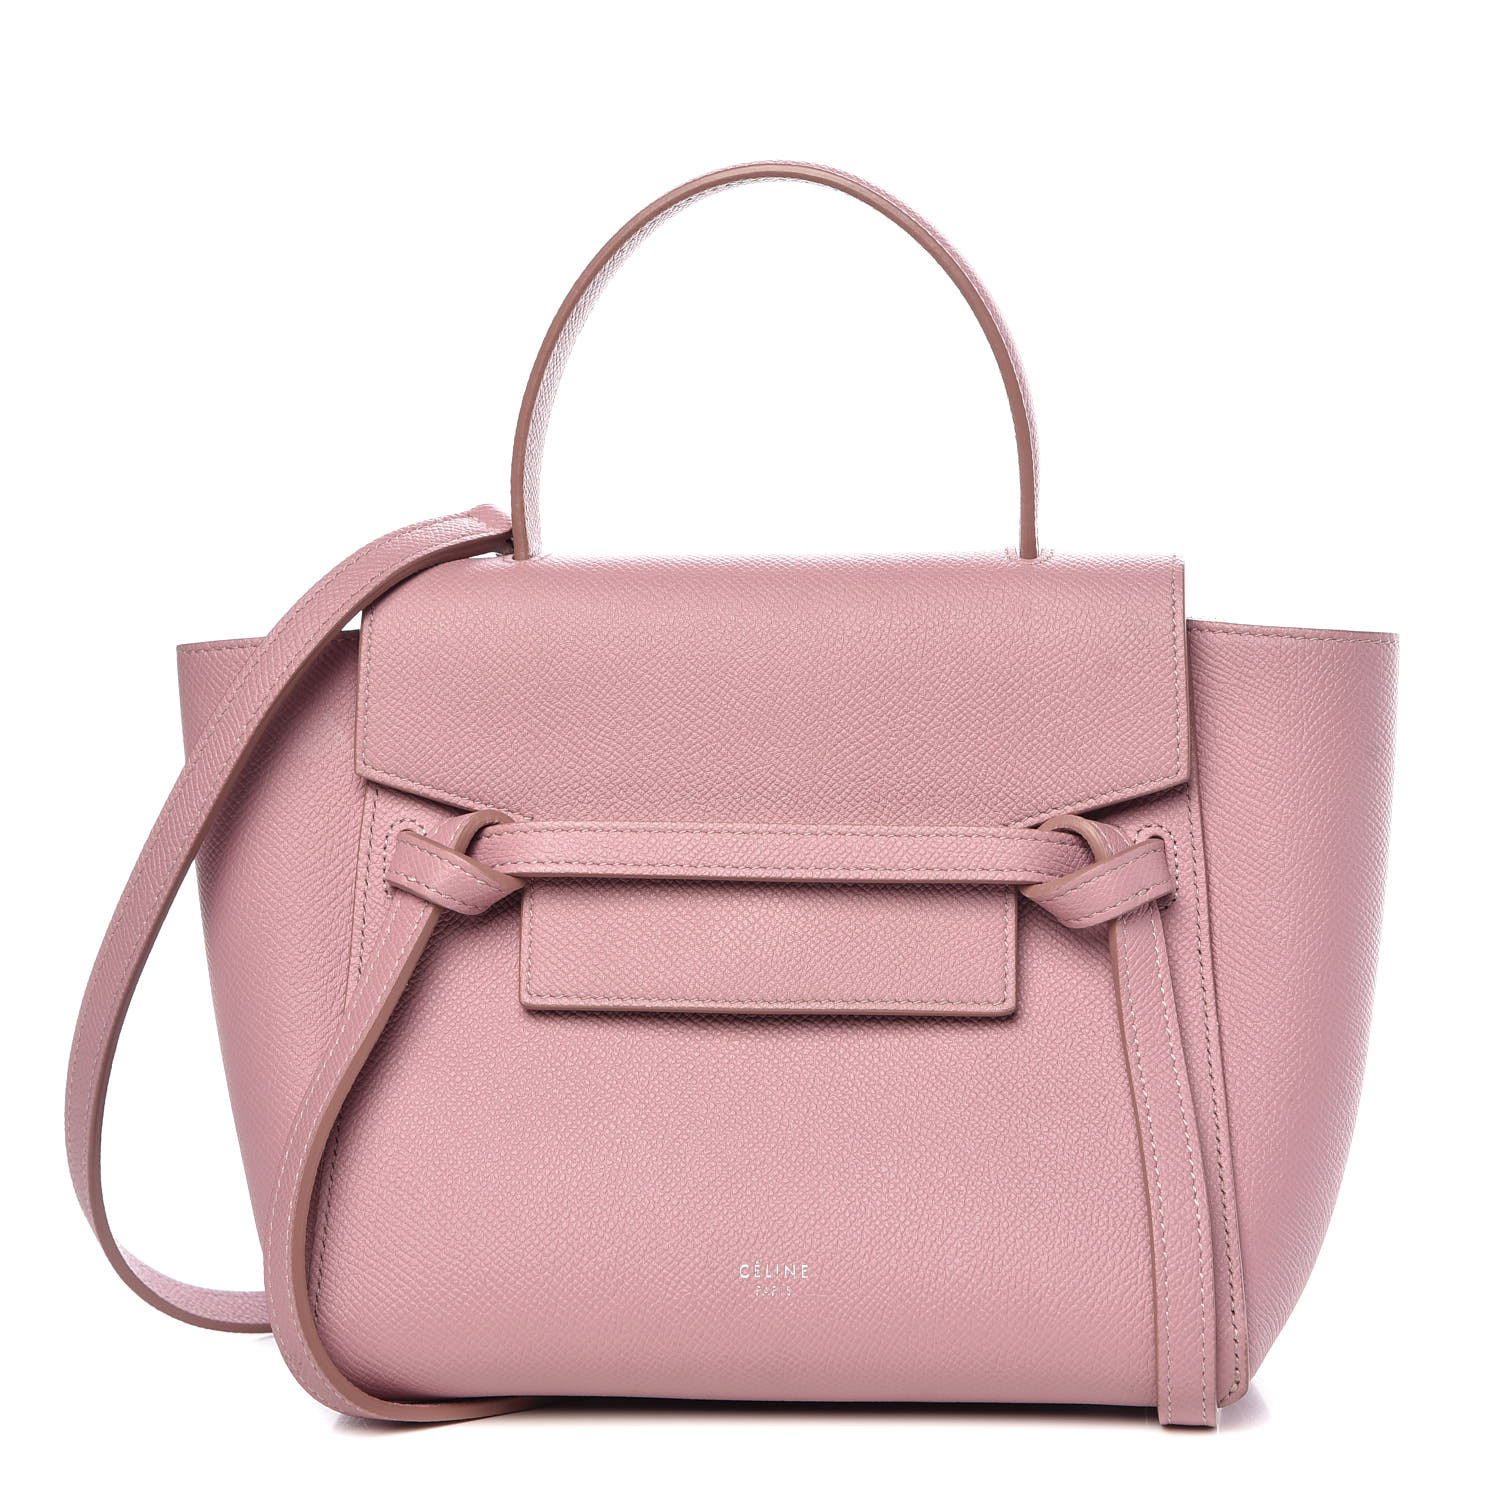 Celine Belt Bag Fashionphile Clearance, 50% OFF | www 